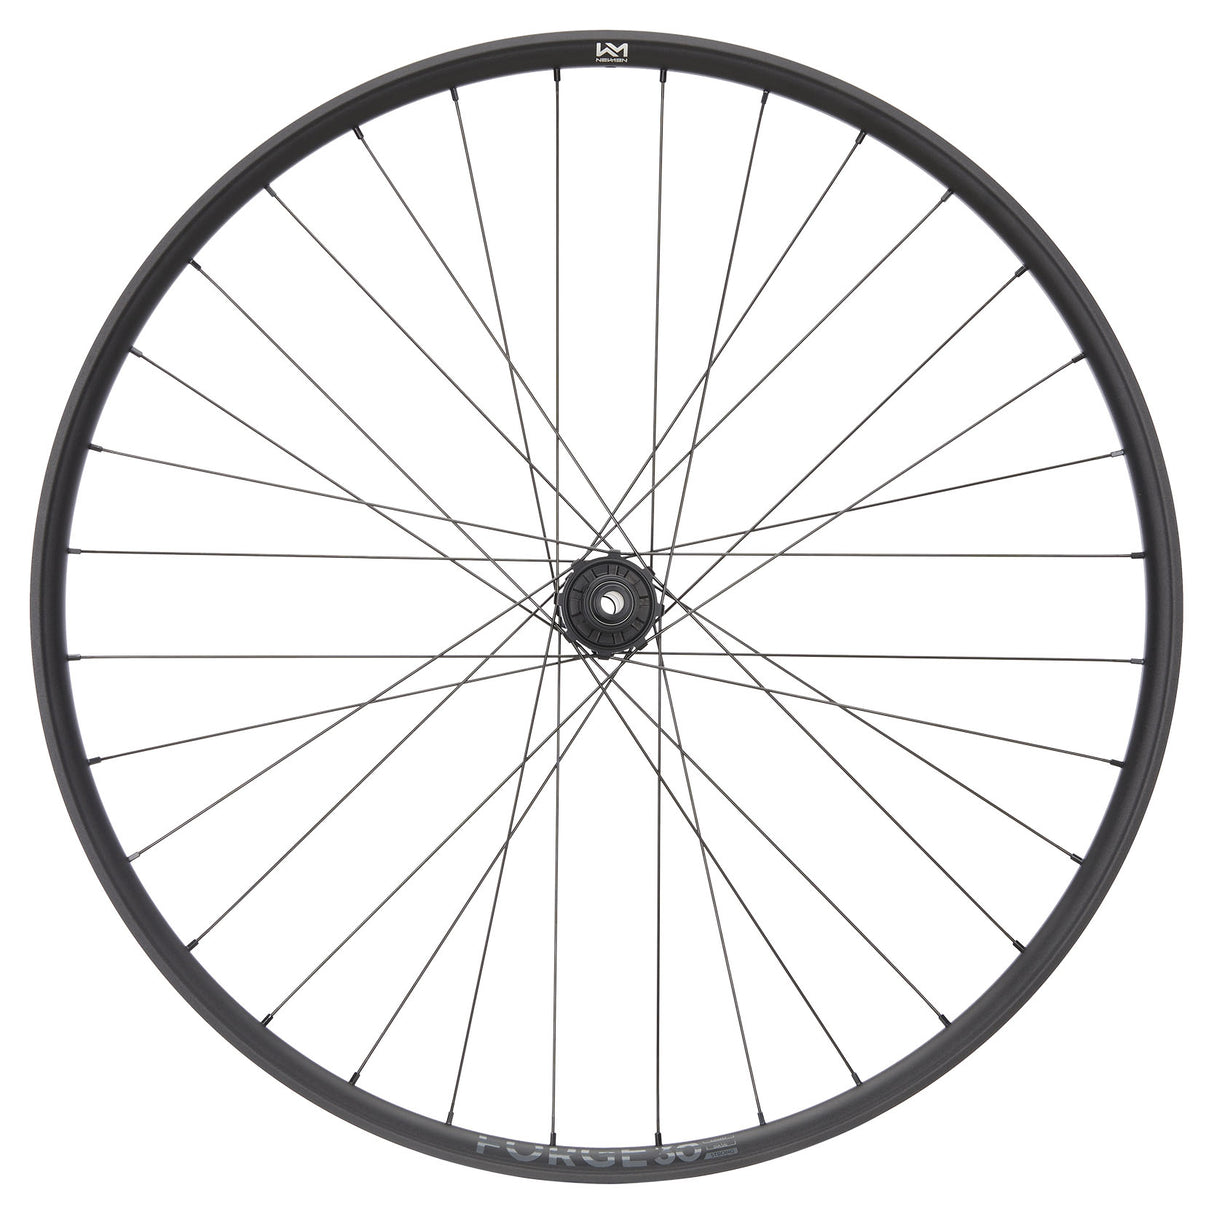 NEWMEN - Wheel (Rear) - Forge 30 Strong | Enduro